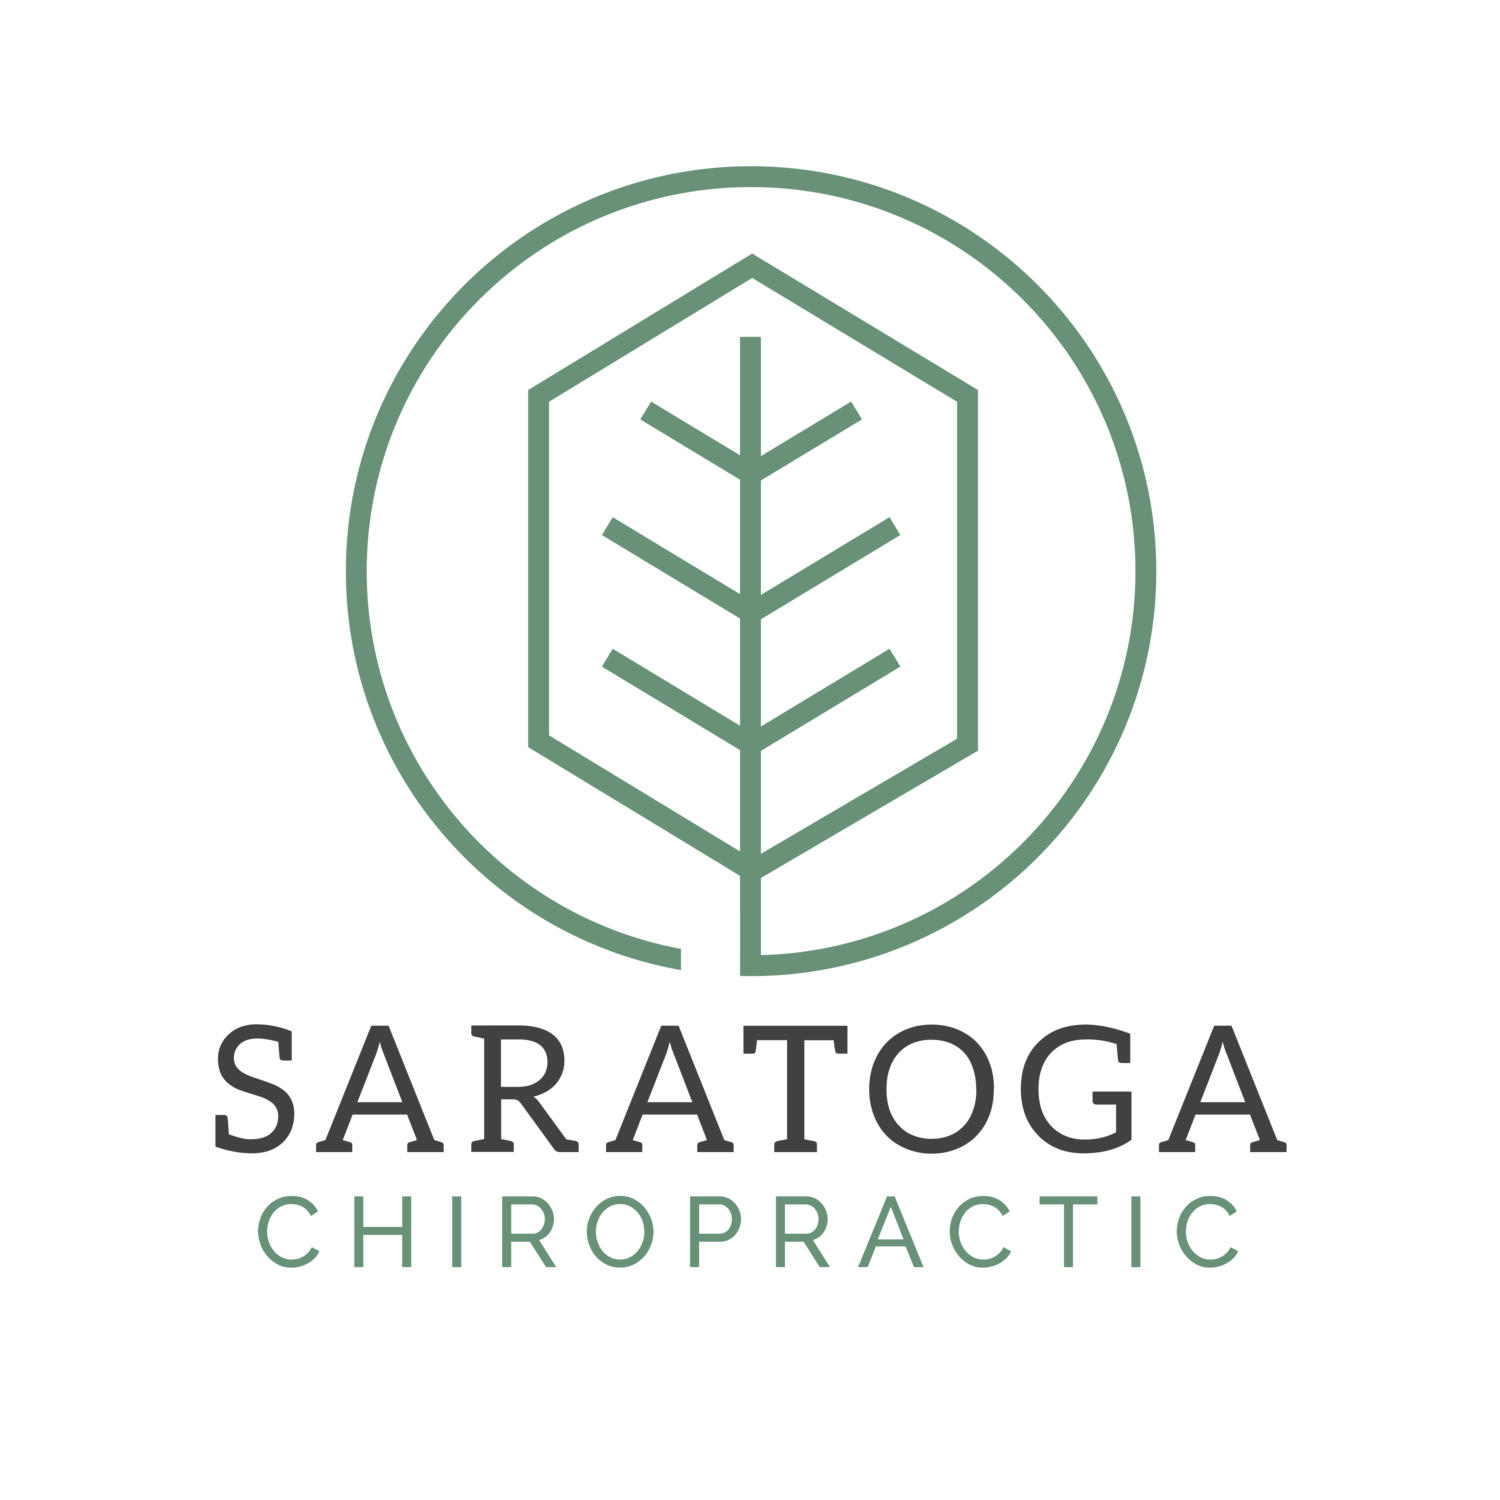 Saratoga Chiropractic